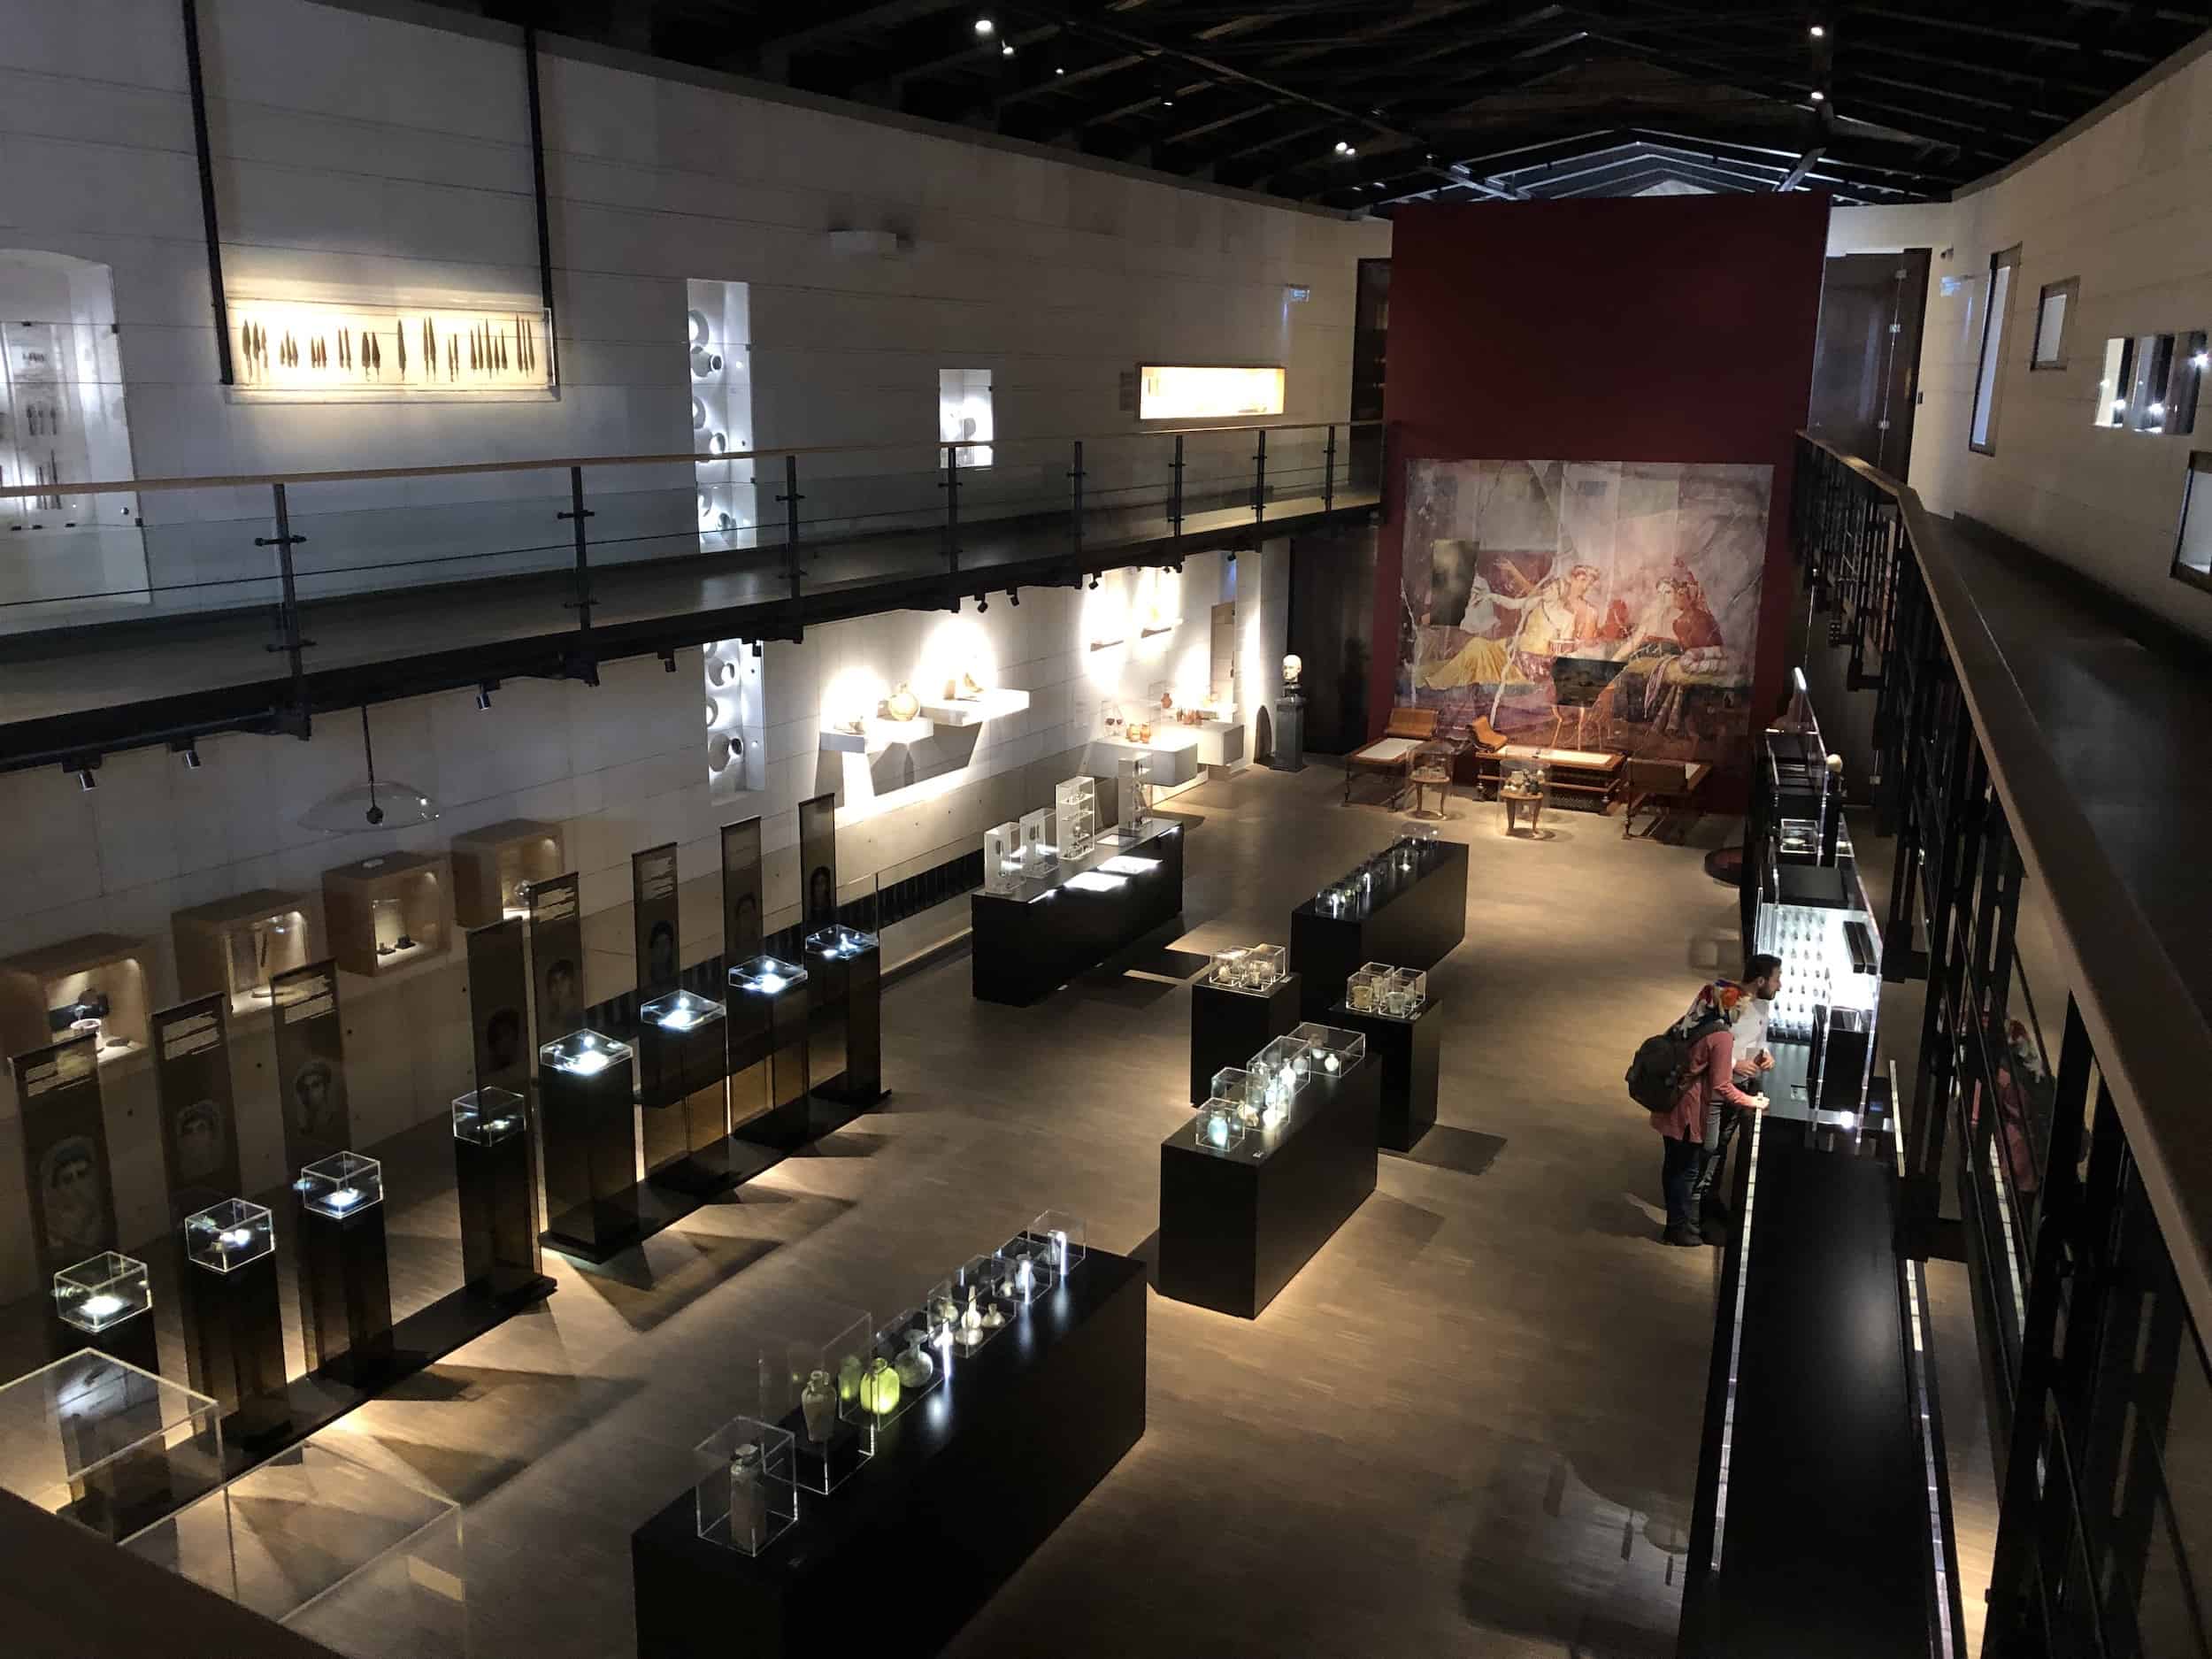 Erimtan Archaeology and Arts Museum in Ankara, Turkey